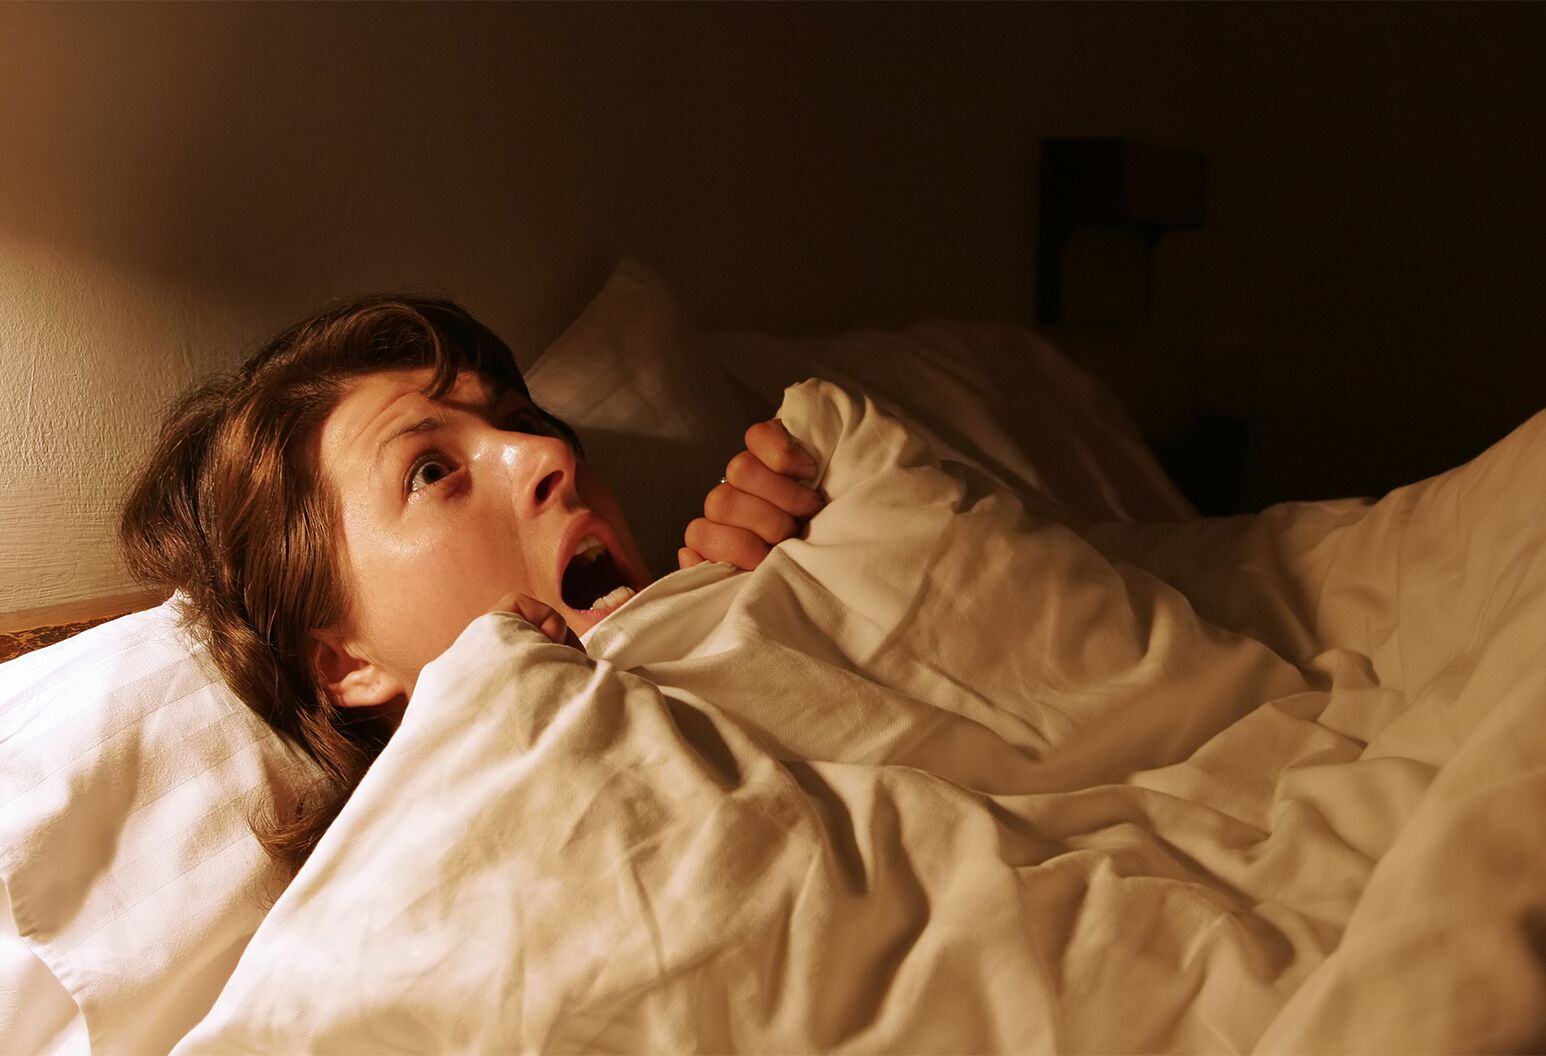 latest research on sleep terrors